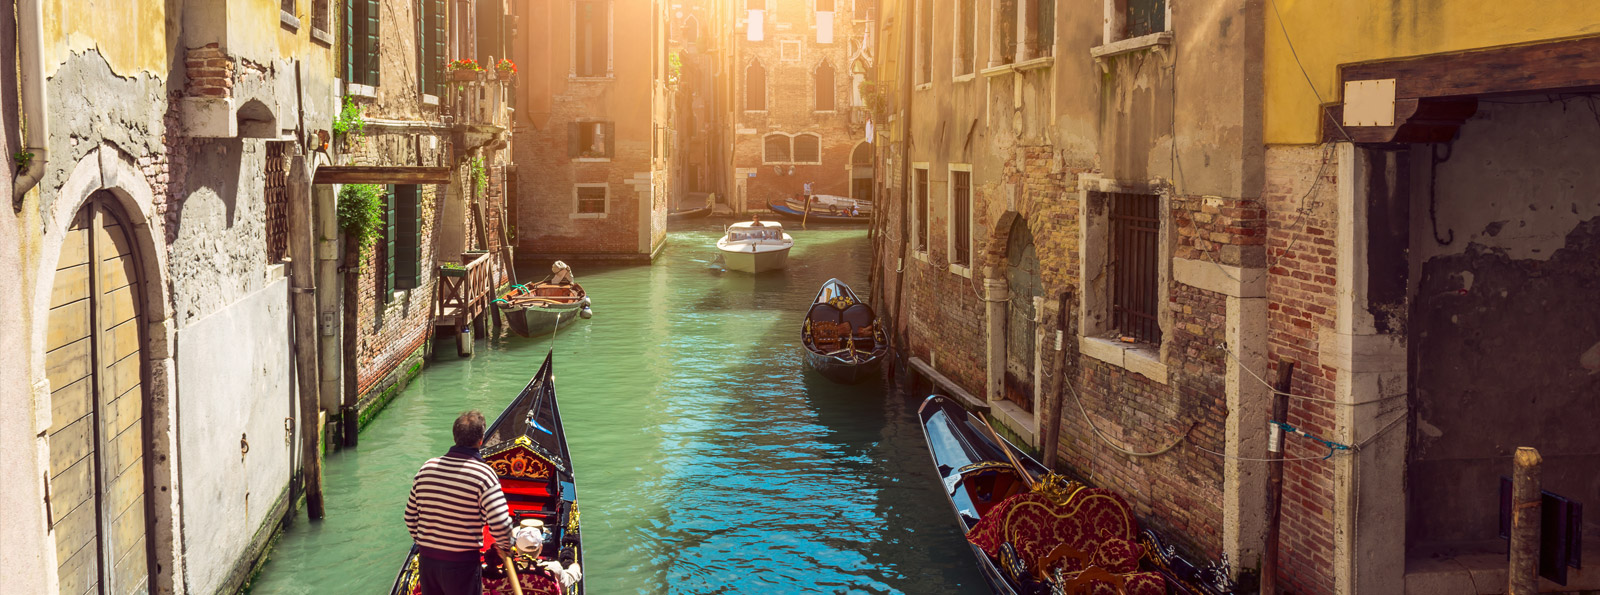 Venice Header Image